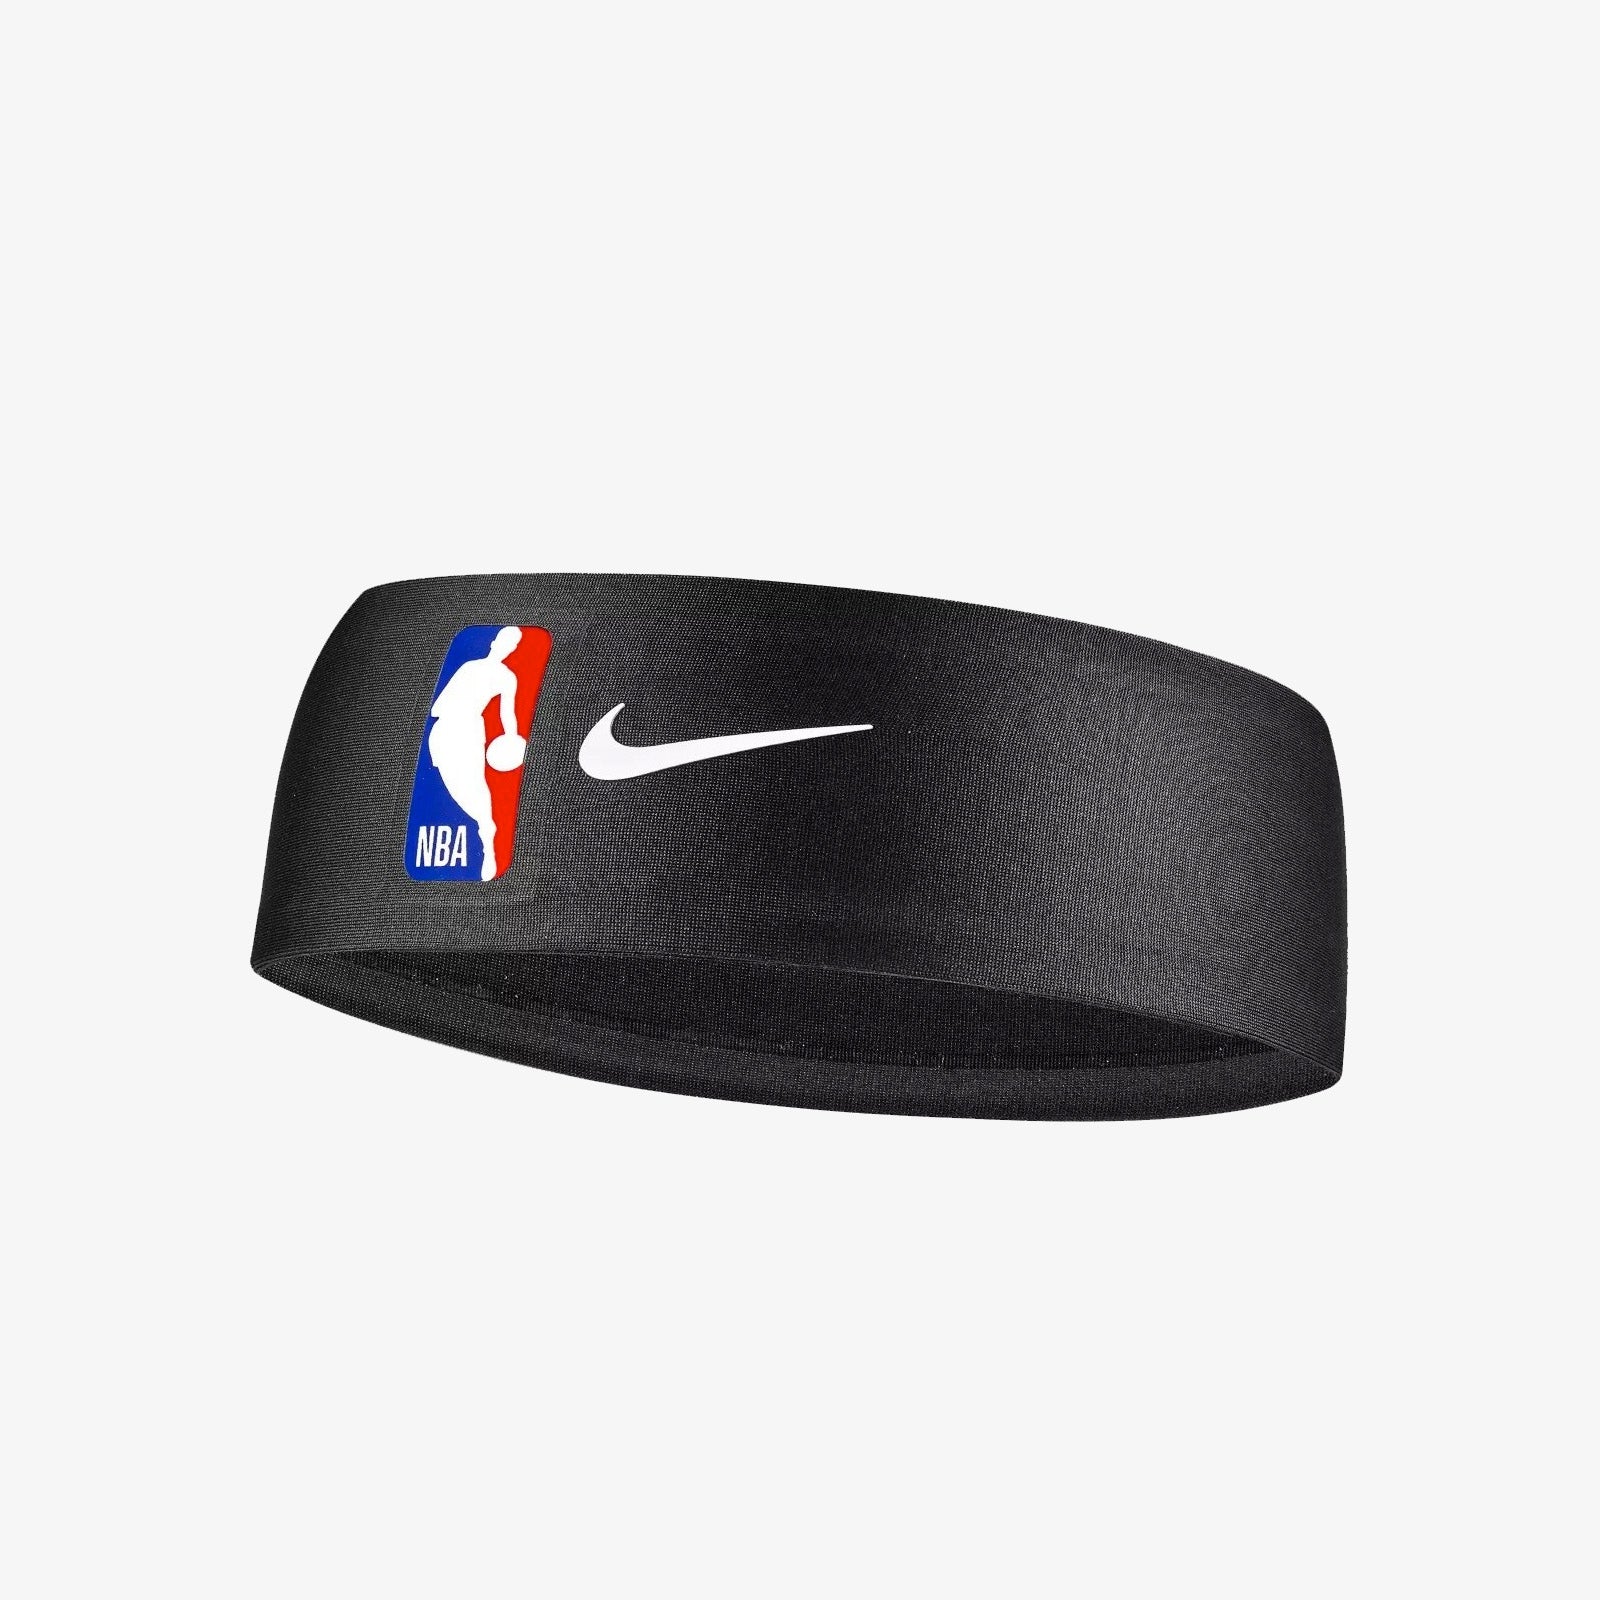 Buy 3 Get 1 Free) Jordan /NK-NBA Bracelet Sports Style Silicone Wristband  Football Basketball Yoga Fitness | Shopee Philippines